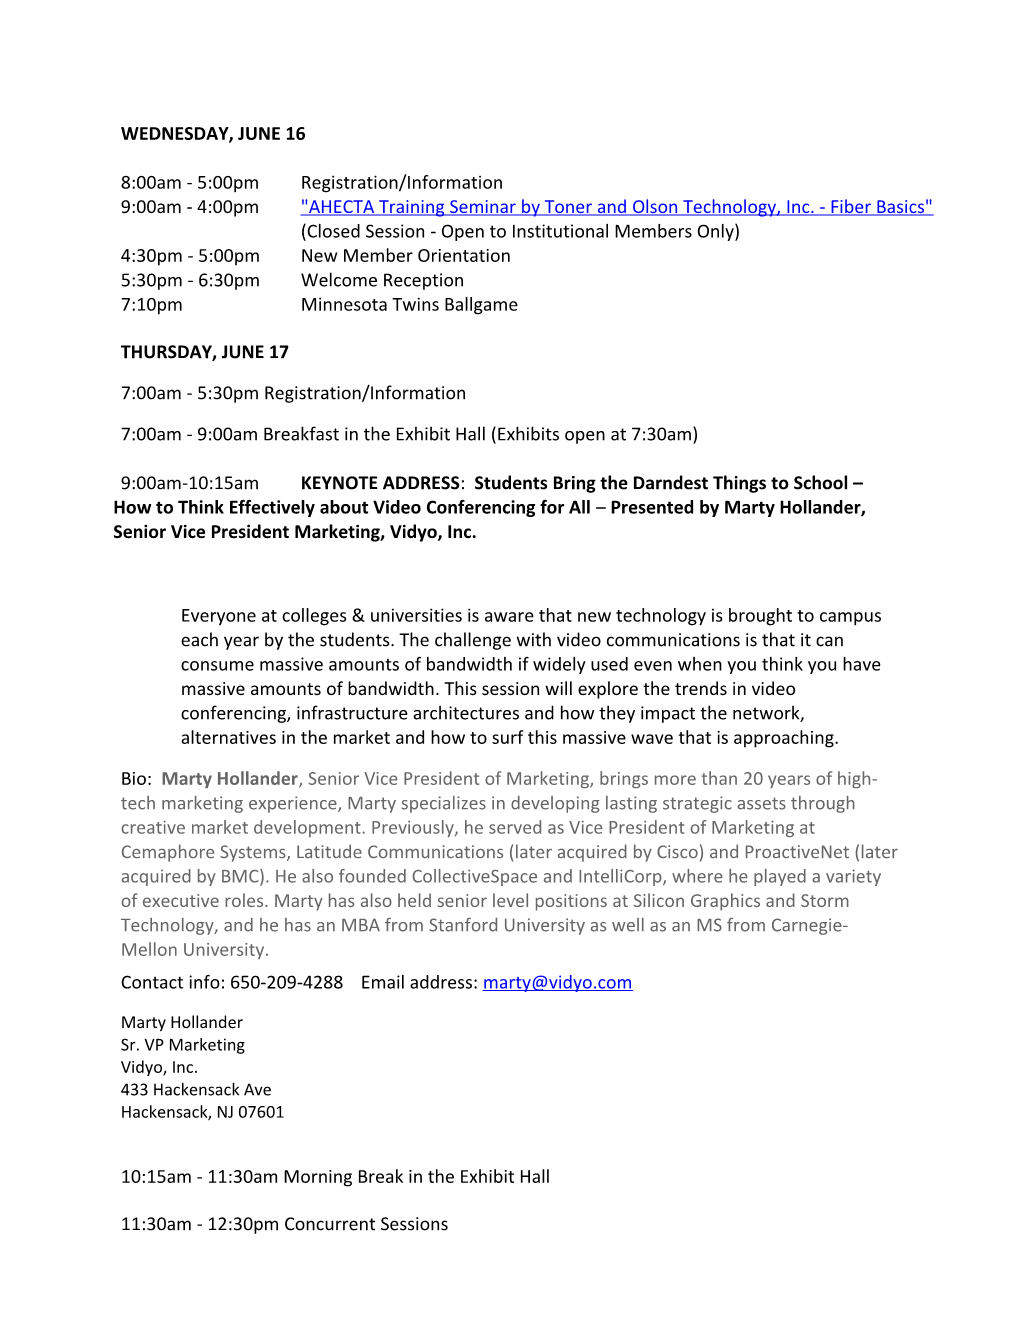 9:00Am - 4:00Pm AHECTA Training Seminar by Toner and Olson Technology, Inc. - Fiber Basics